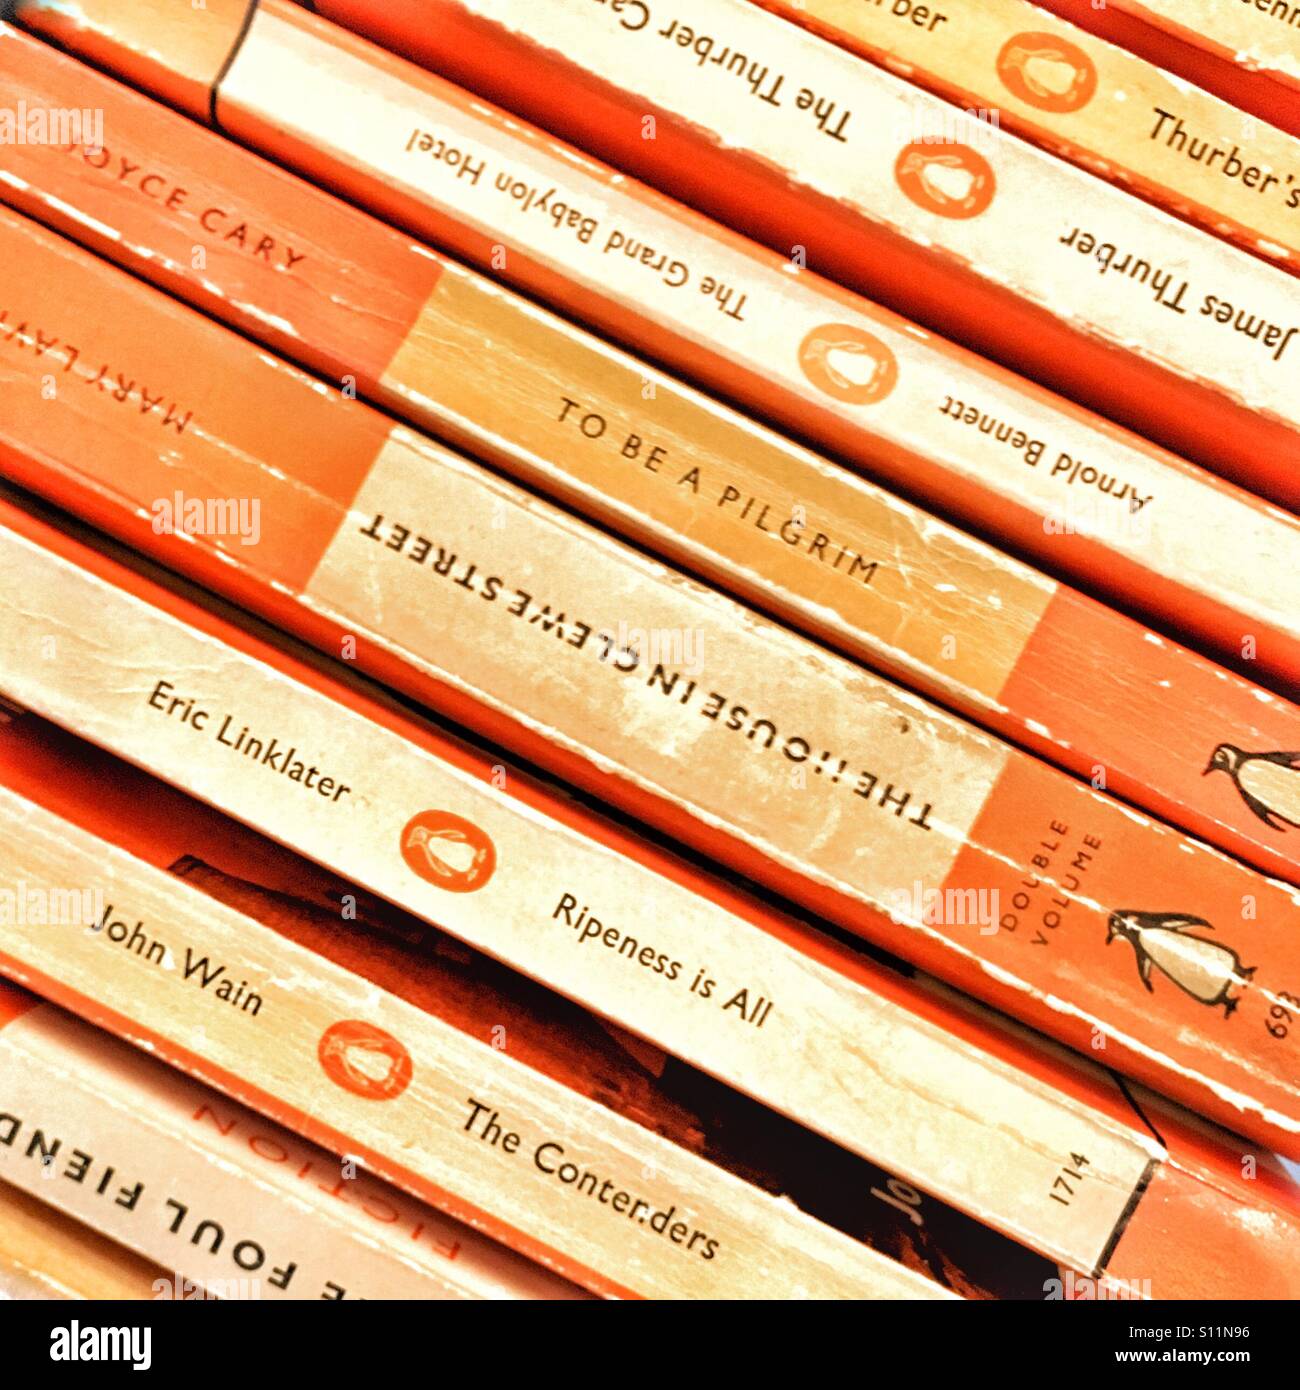 Pile of orange paperback books Stock Photo